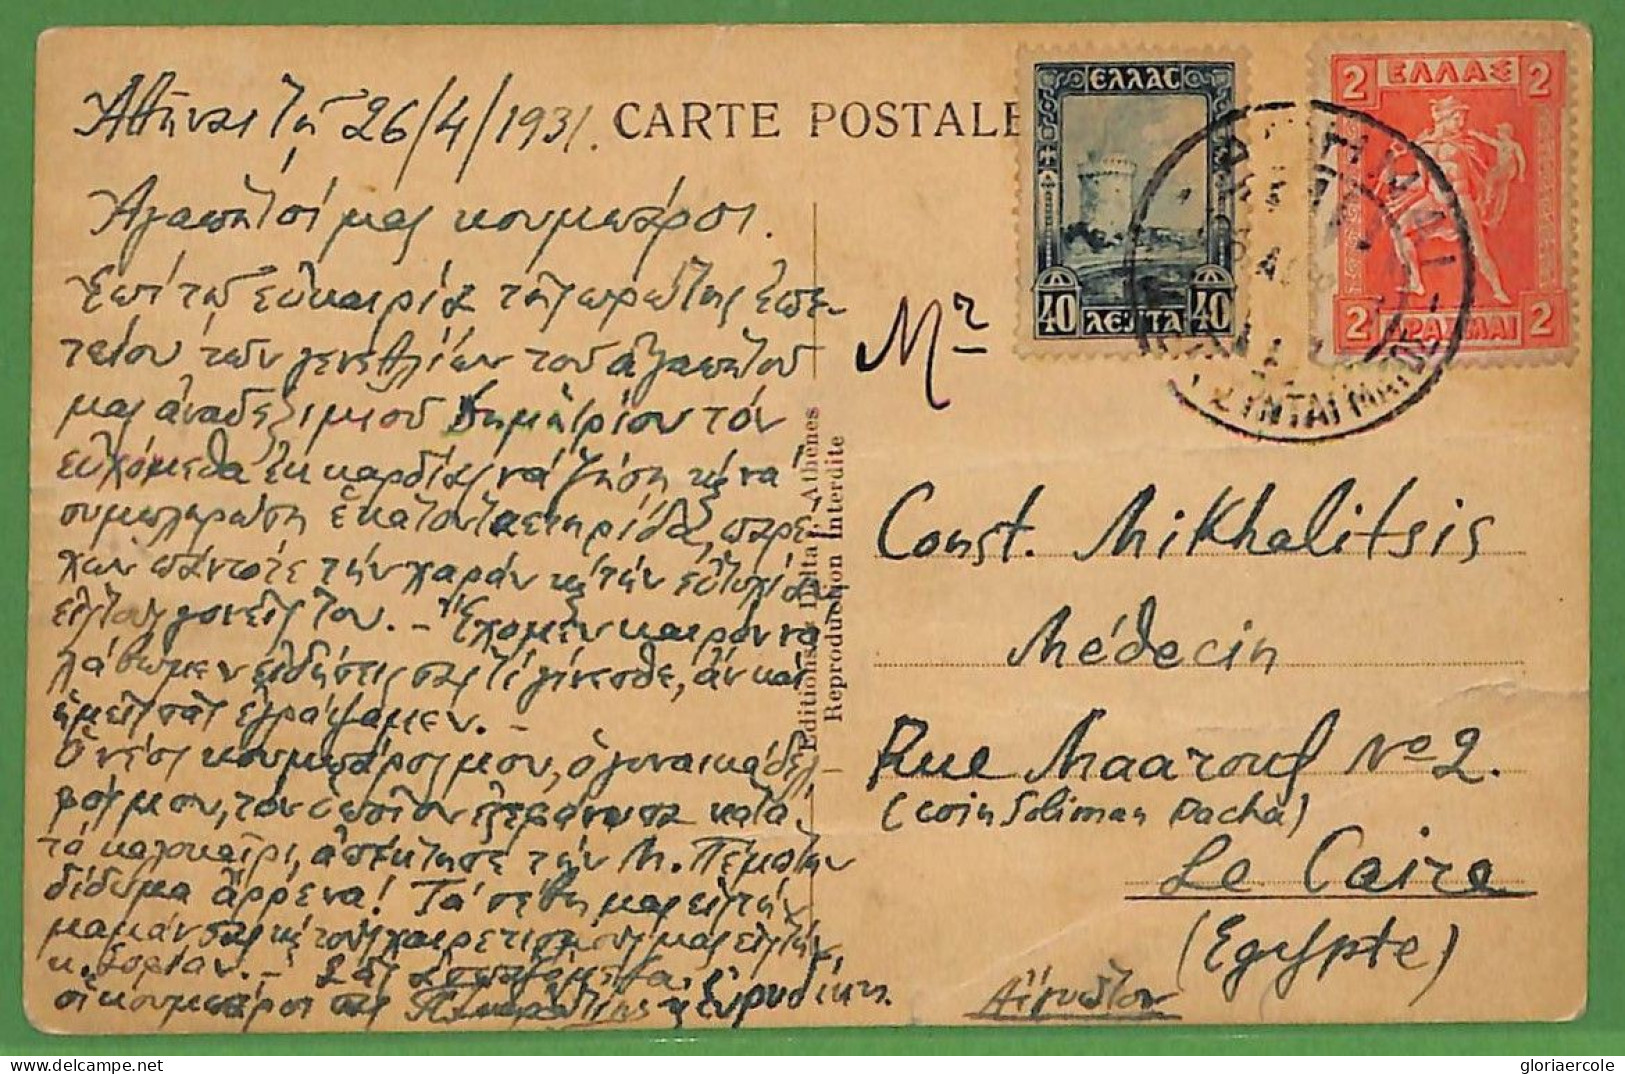 Ad0909 - GREECE - Postal History -  POSTCARD To CAIRO Egypt  1931 - Storia Postale